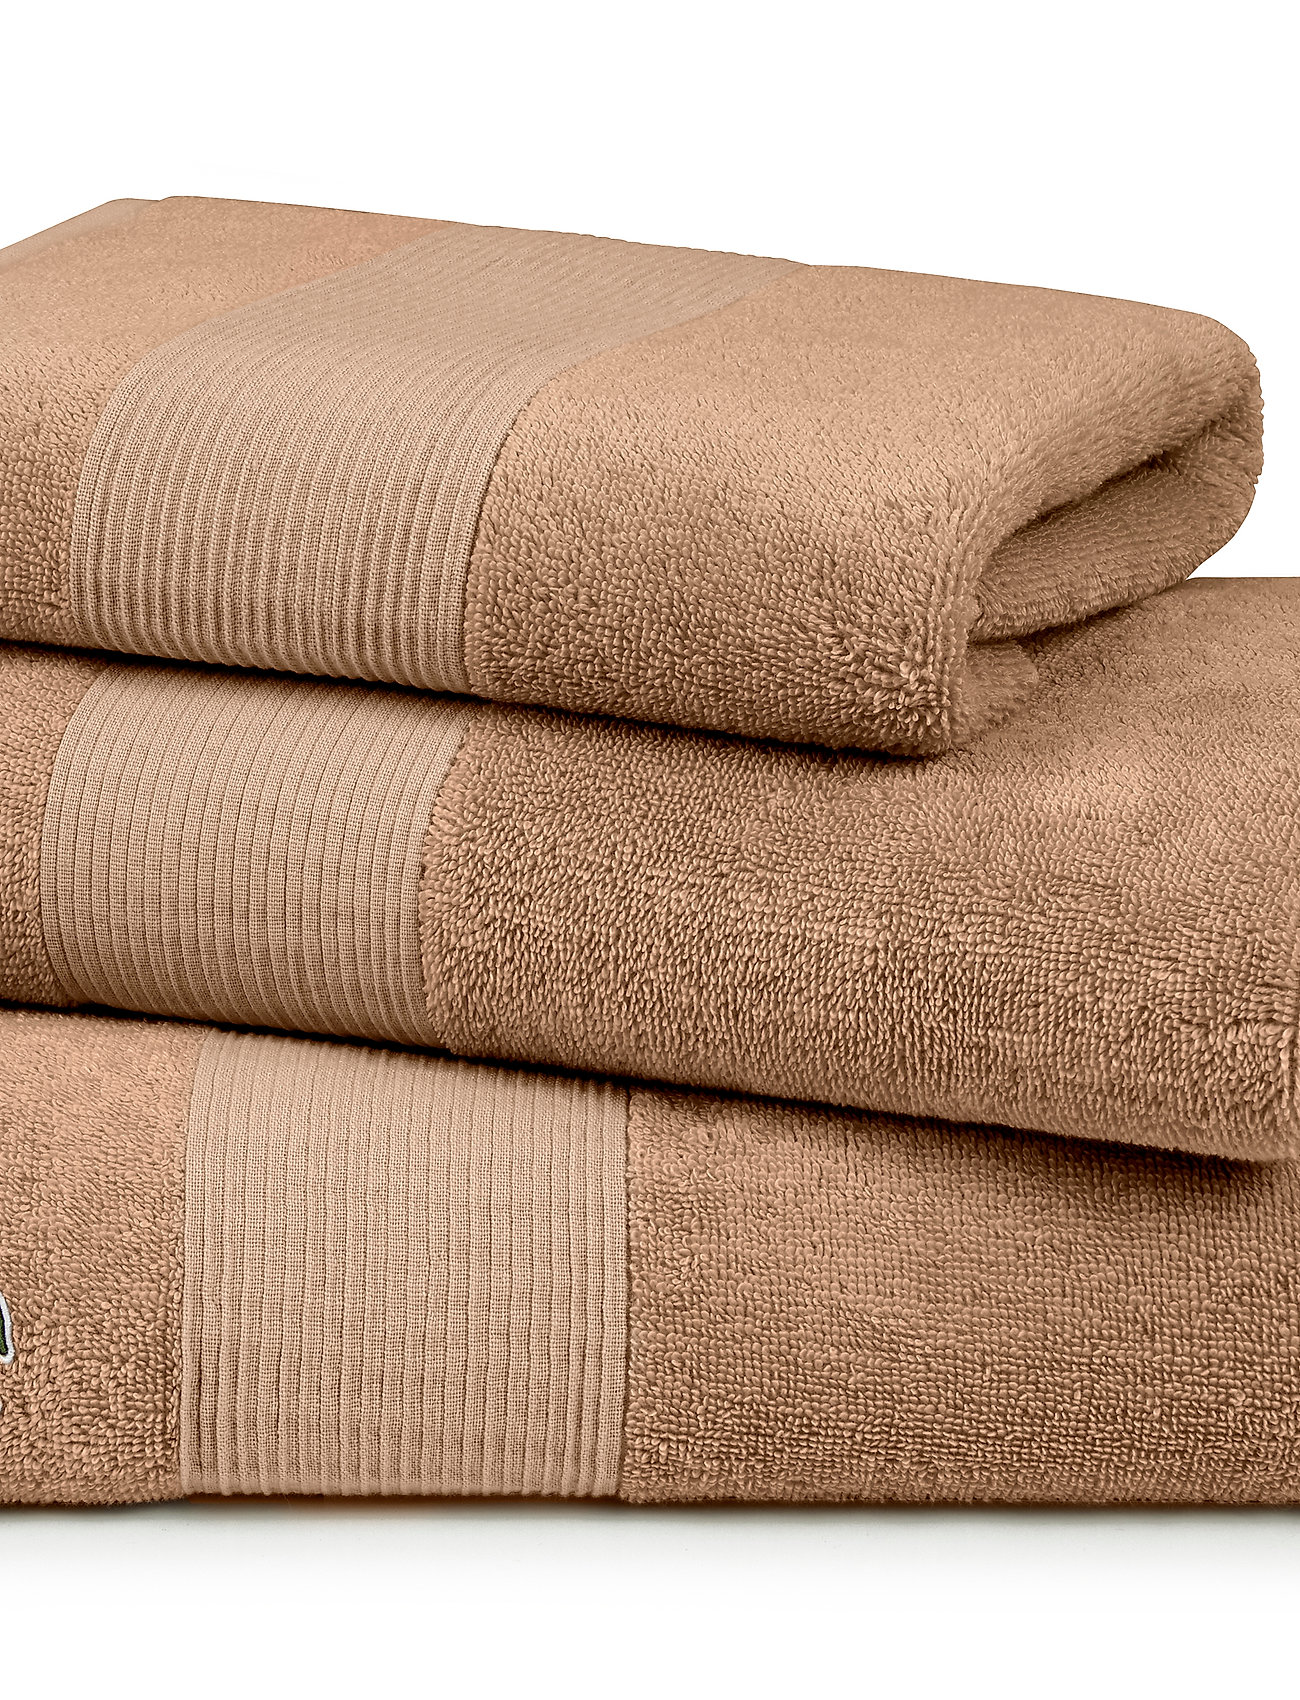 Lacoste Home - LLECROCO Bath mat - bath rugs - beige - 1